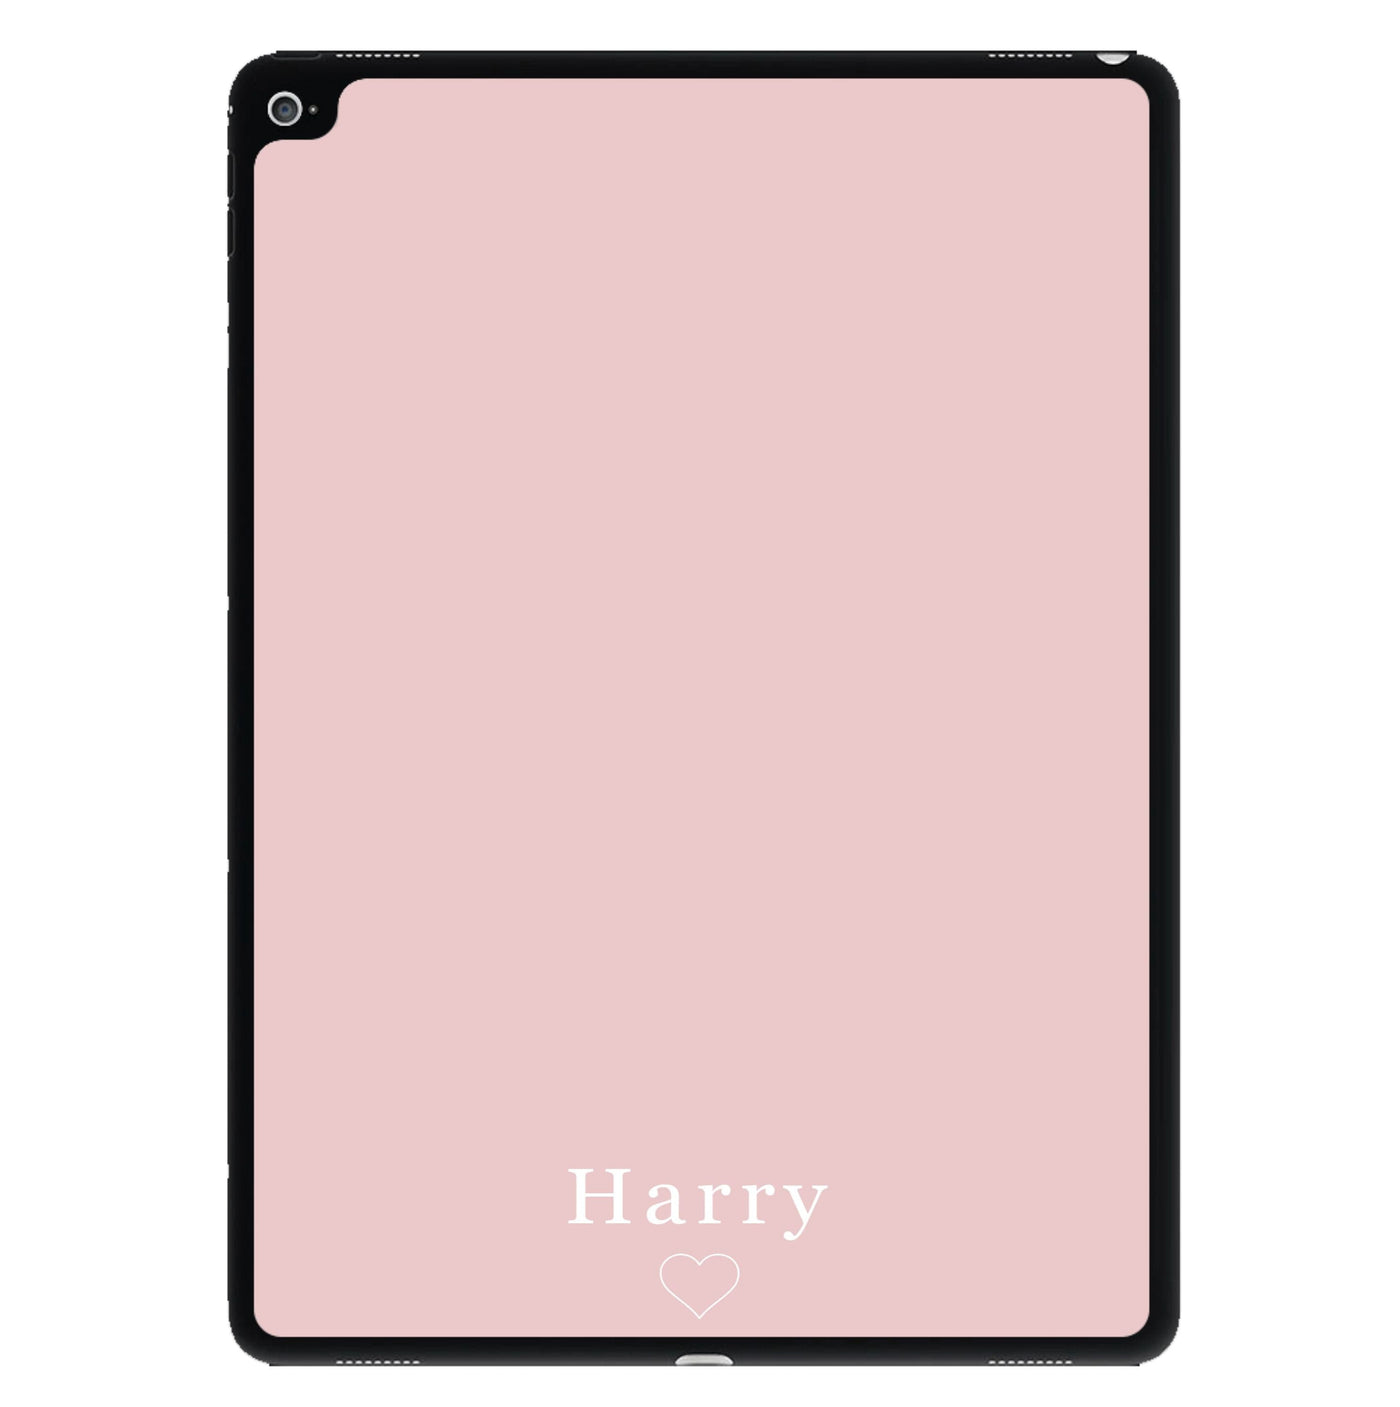 Harry - Pink Harry Styles iPad Case